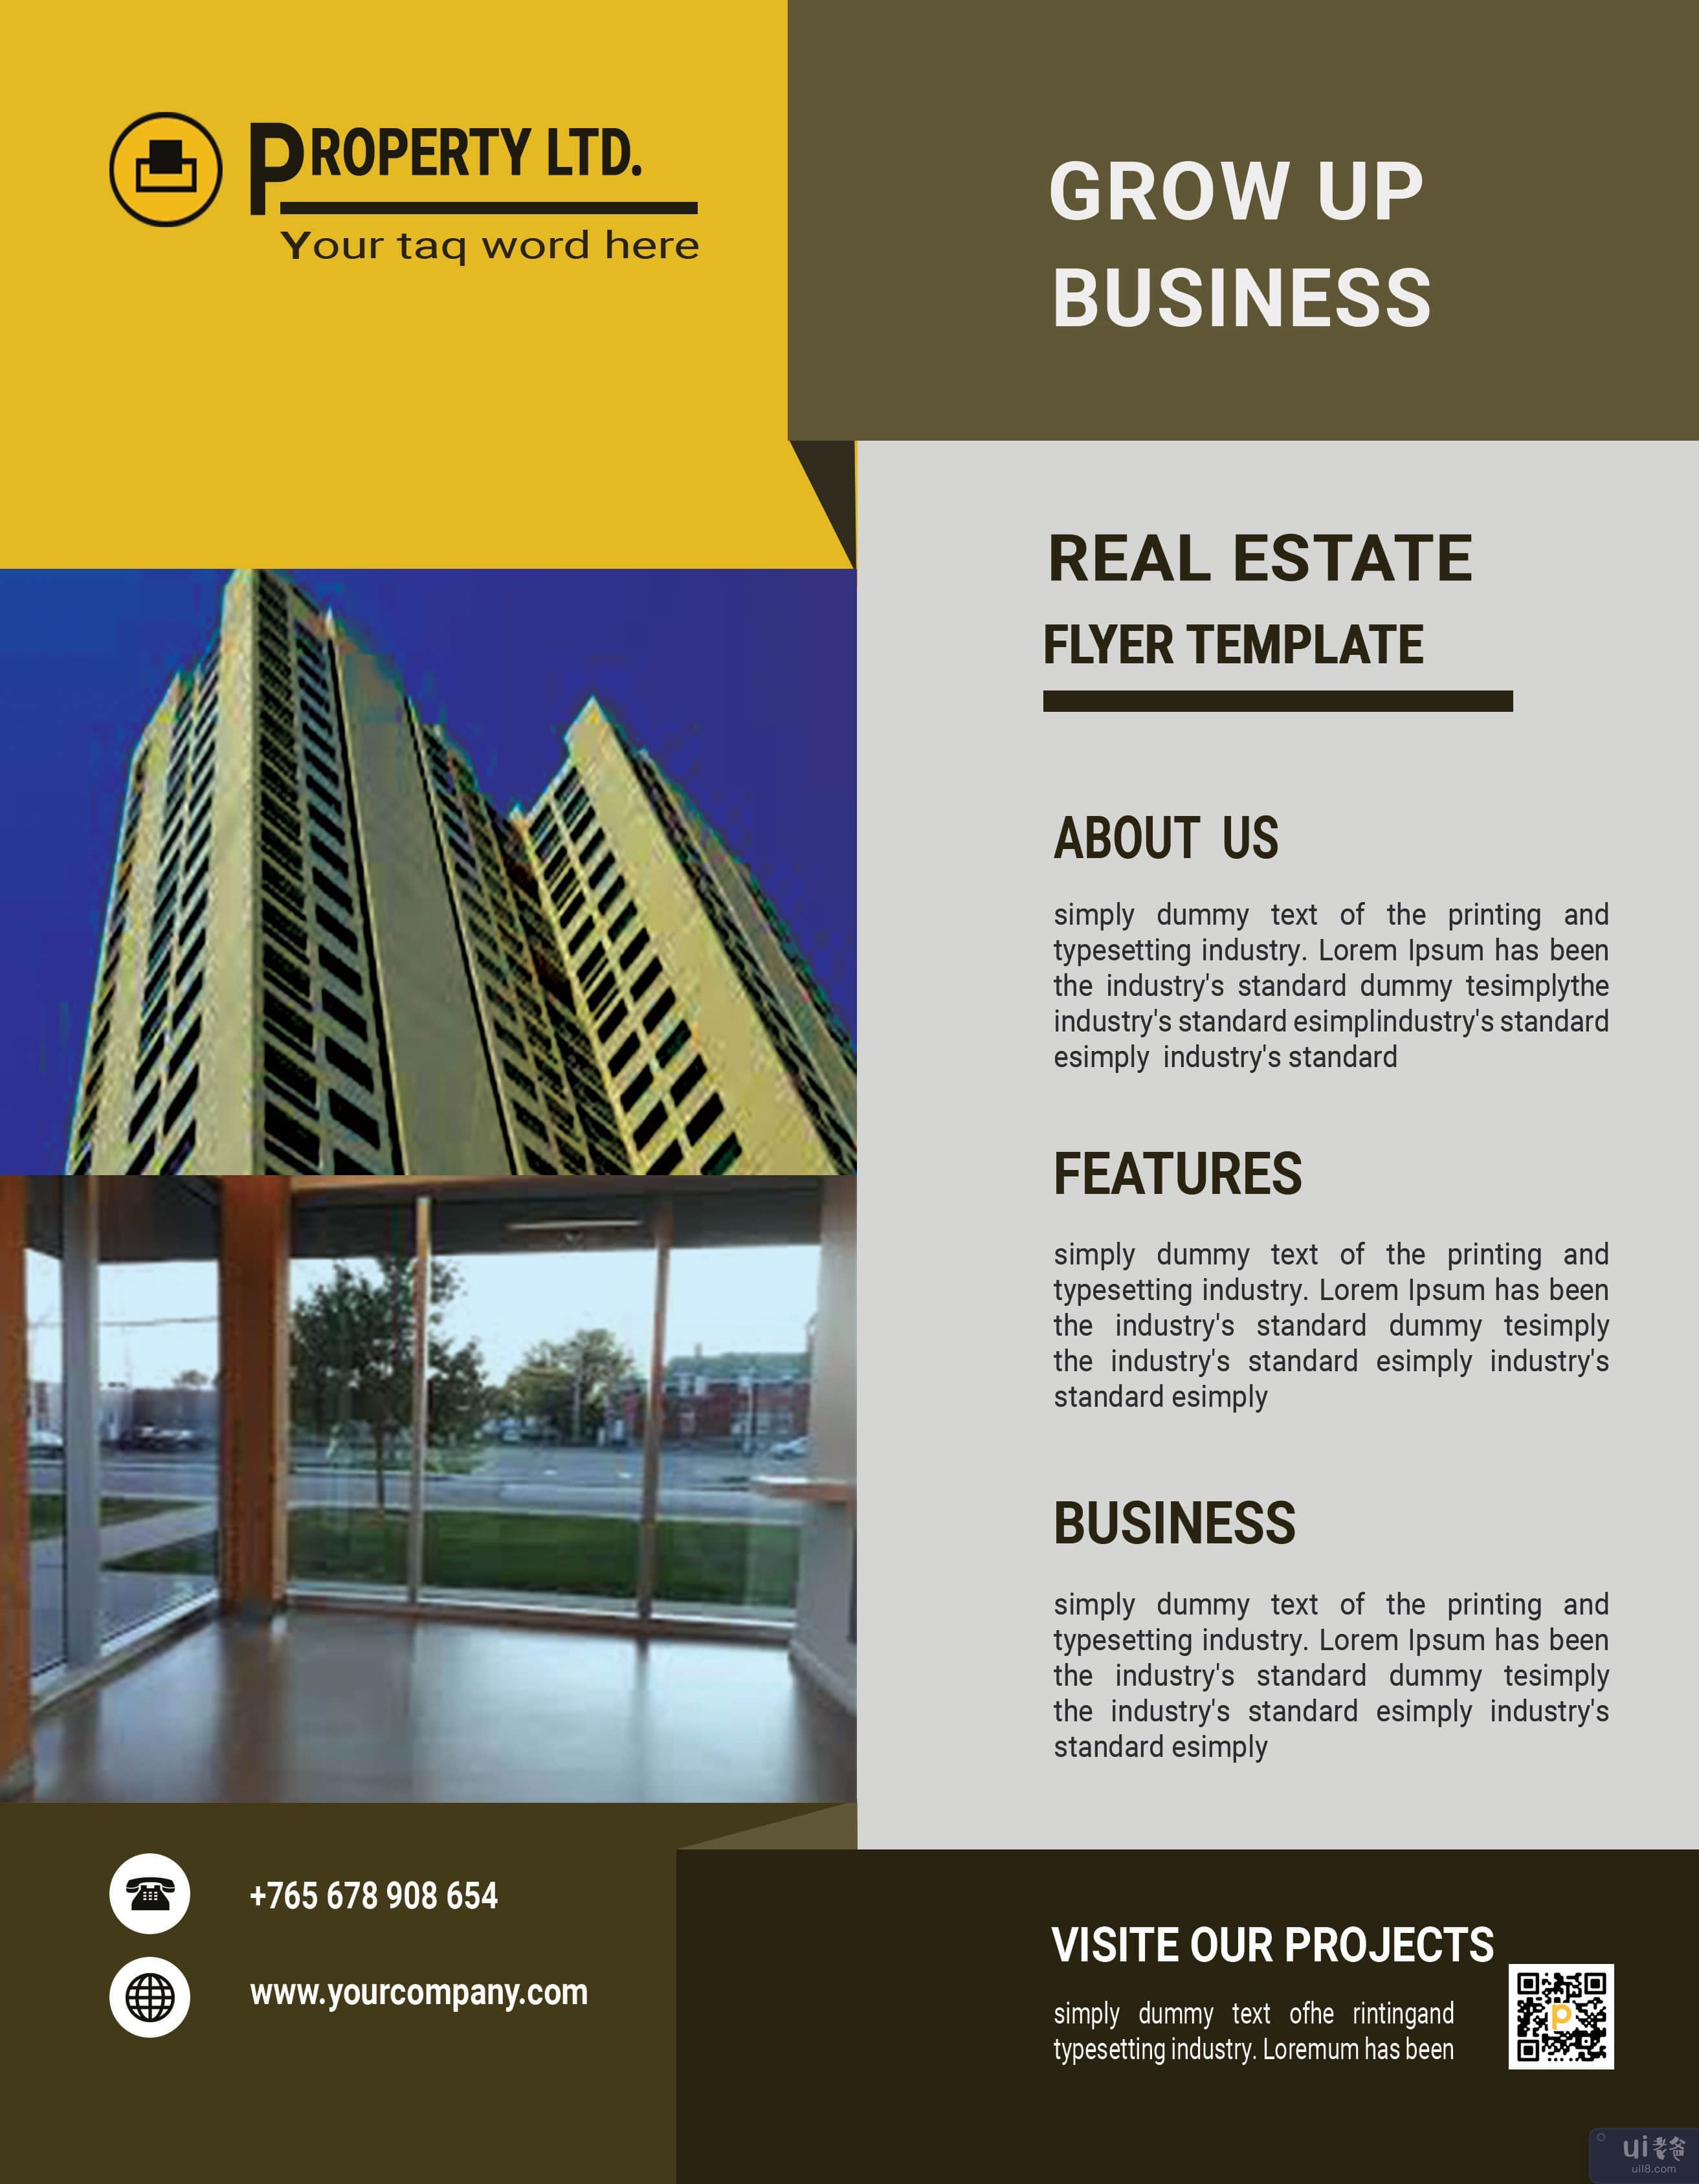 优雅的企业房地产传单模板(Elegant Corporate Real Estate Flyer Template)插图